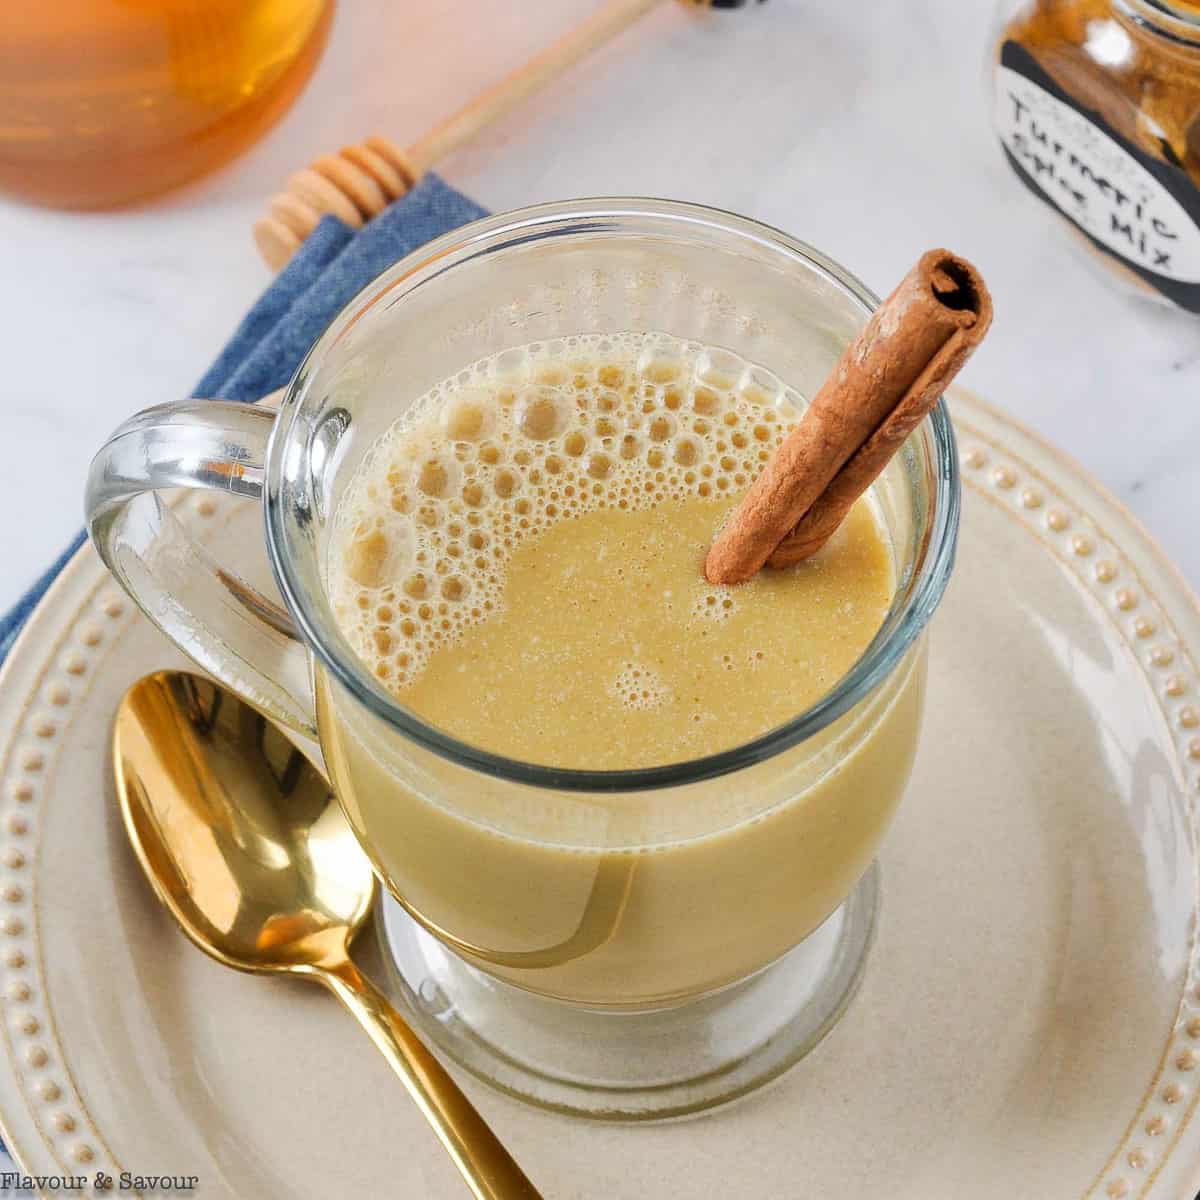 Overhead view of a mug of warm turmeric cinnamon milk with a cinnamon stick.